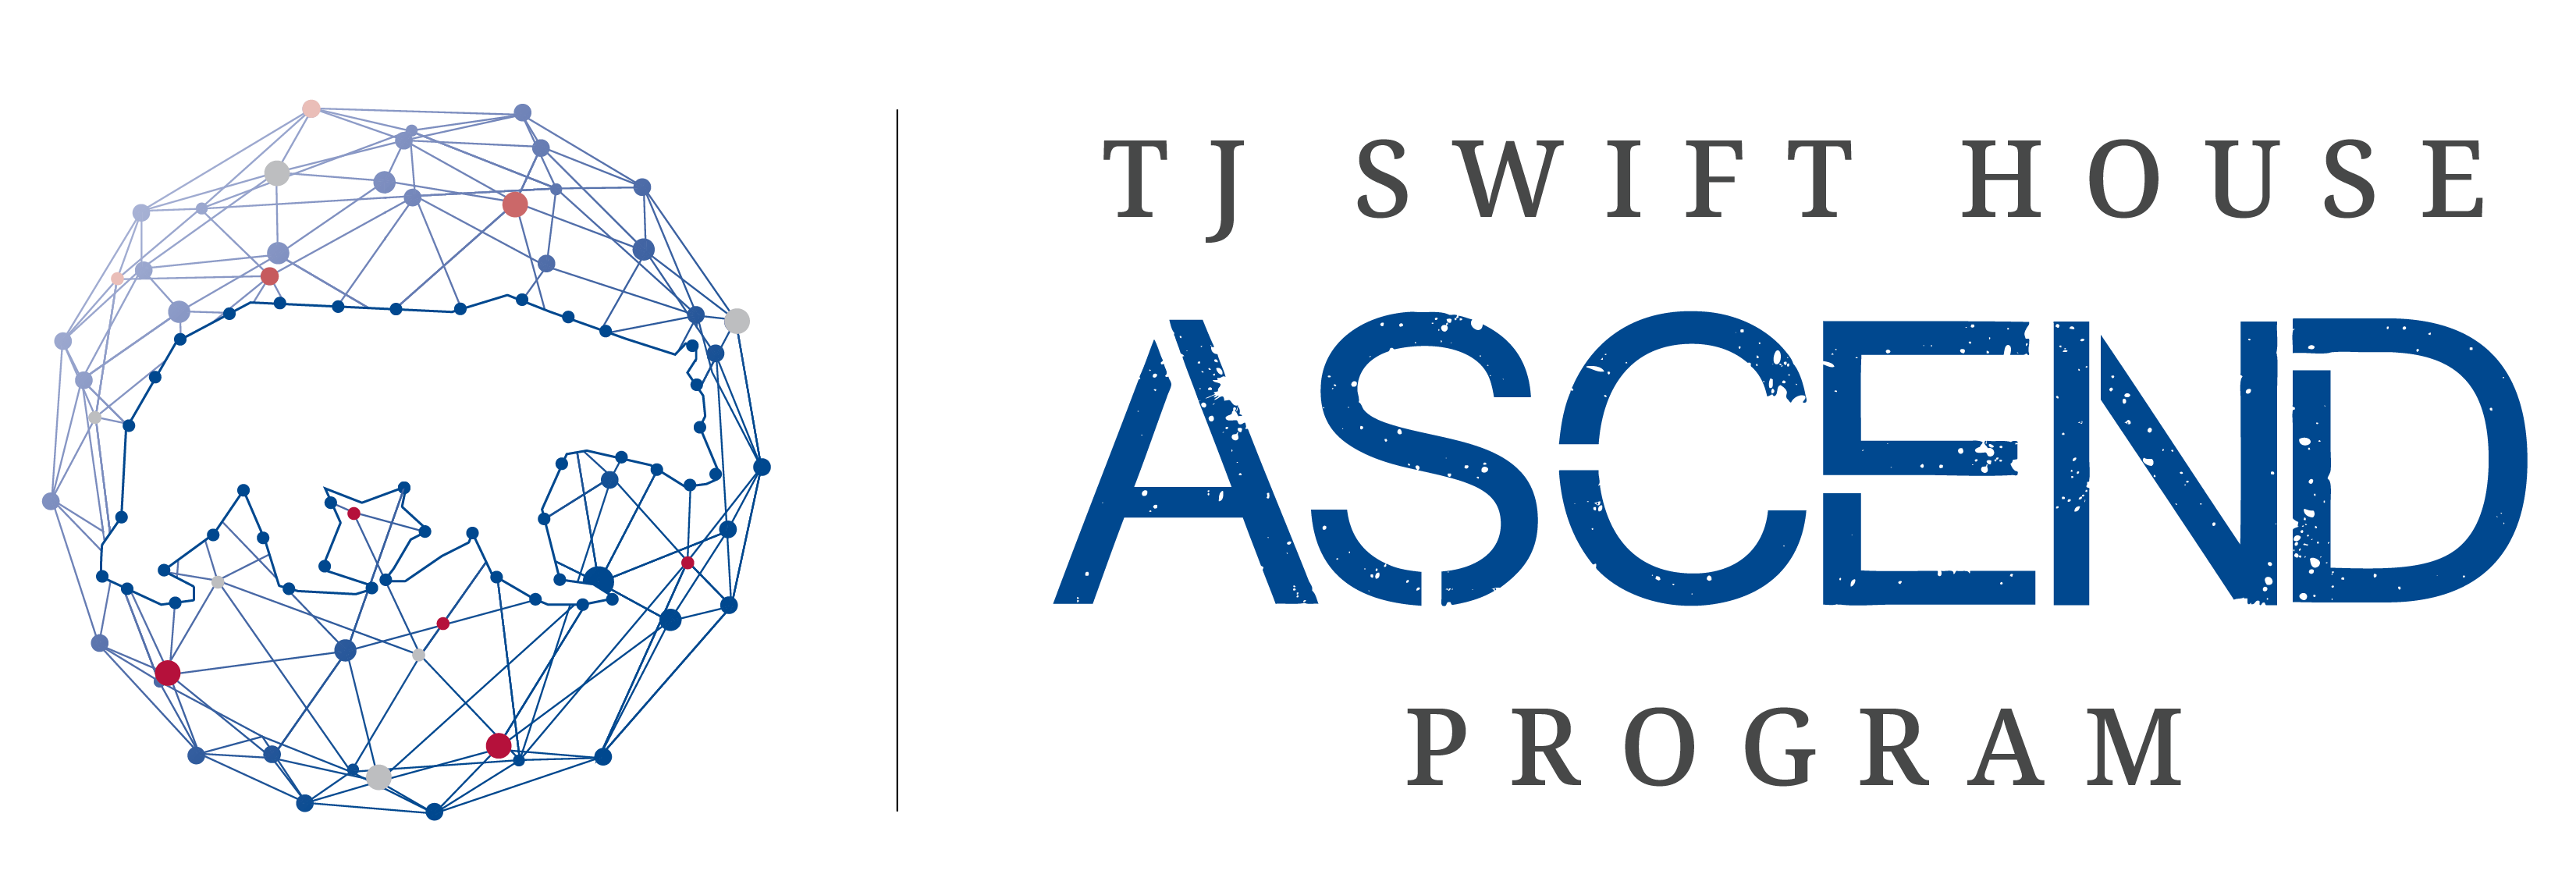 image of TJ Switft House ASCEND logo